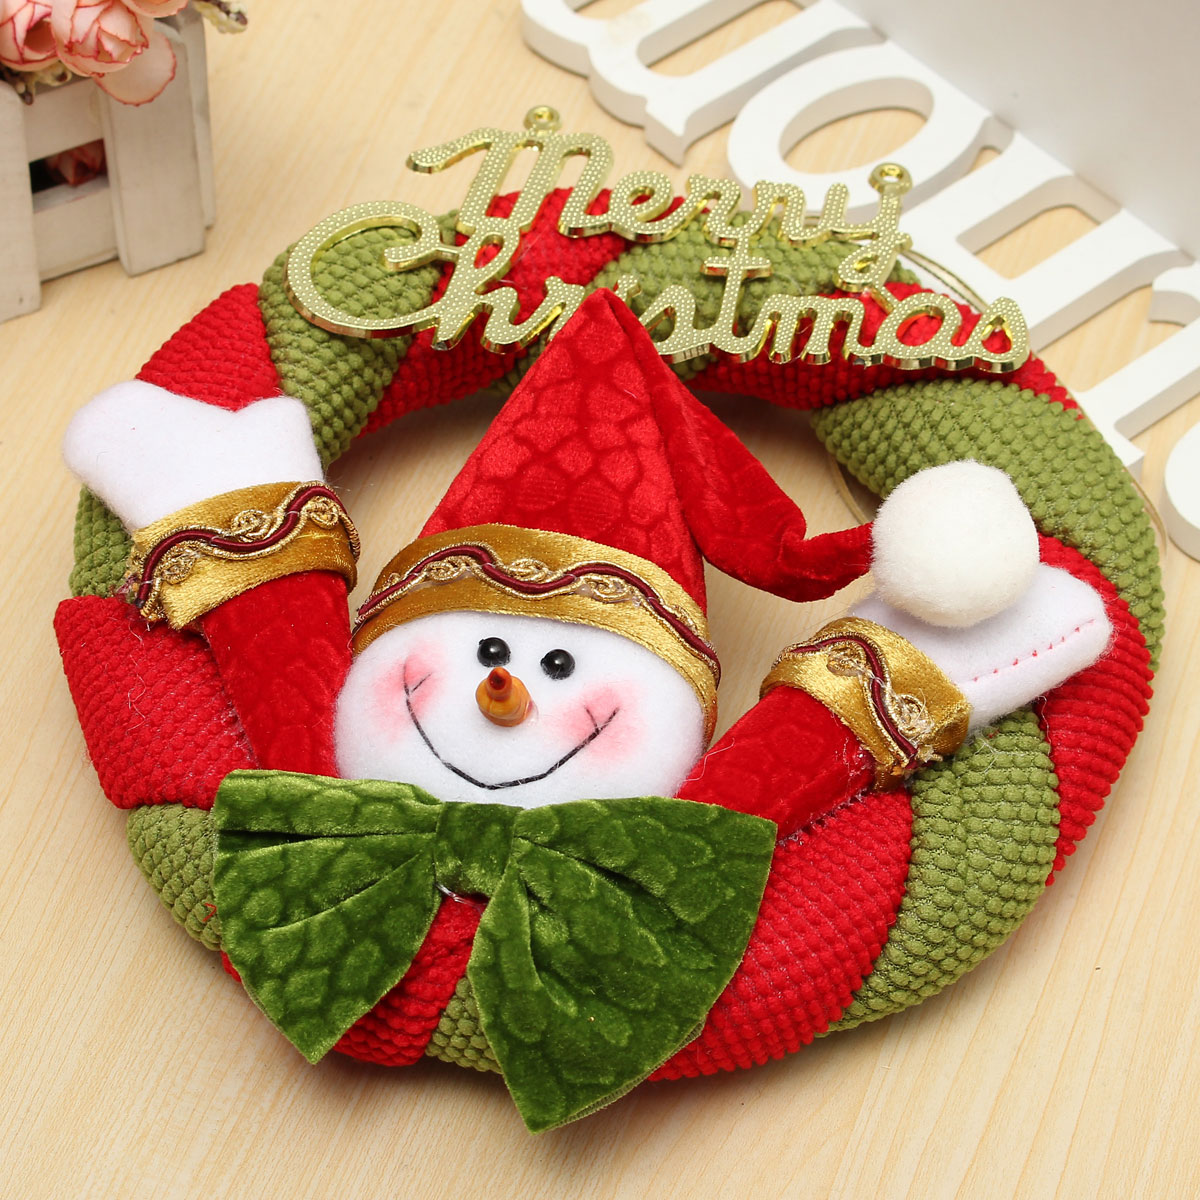 Christmas-Santa-Claus-Ornaments-Festival-Party-Xmas-Tree-Hanging-Decoration-1002250-6